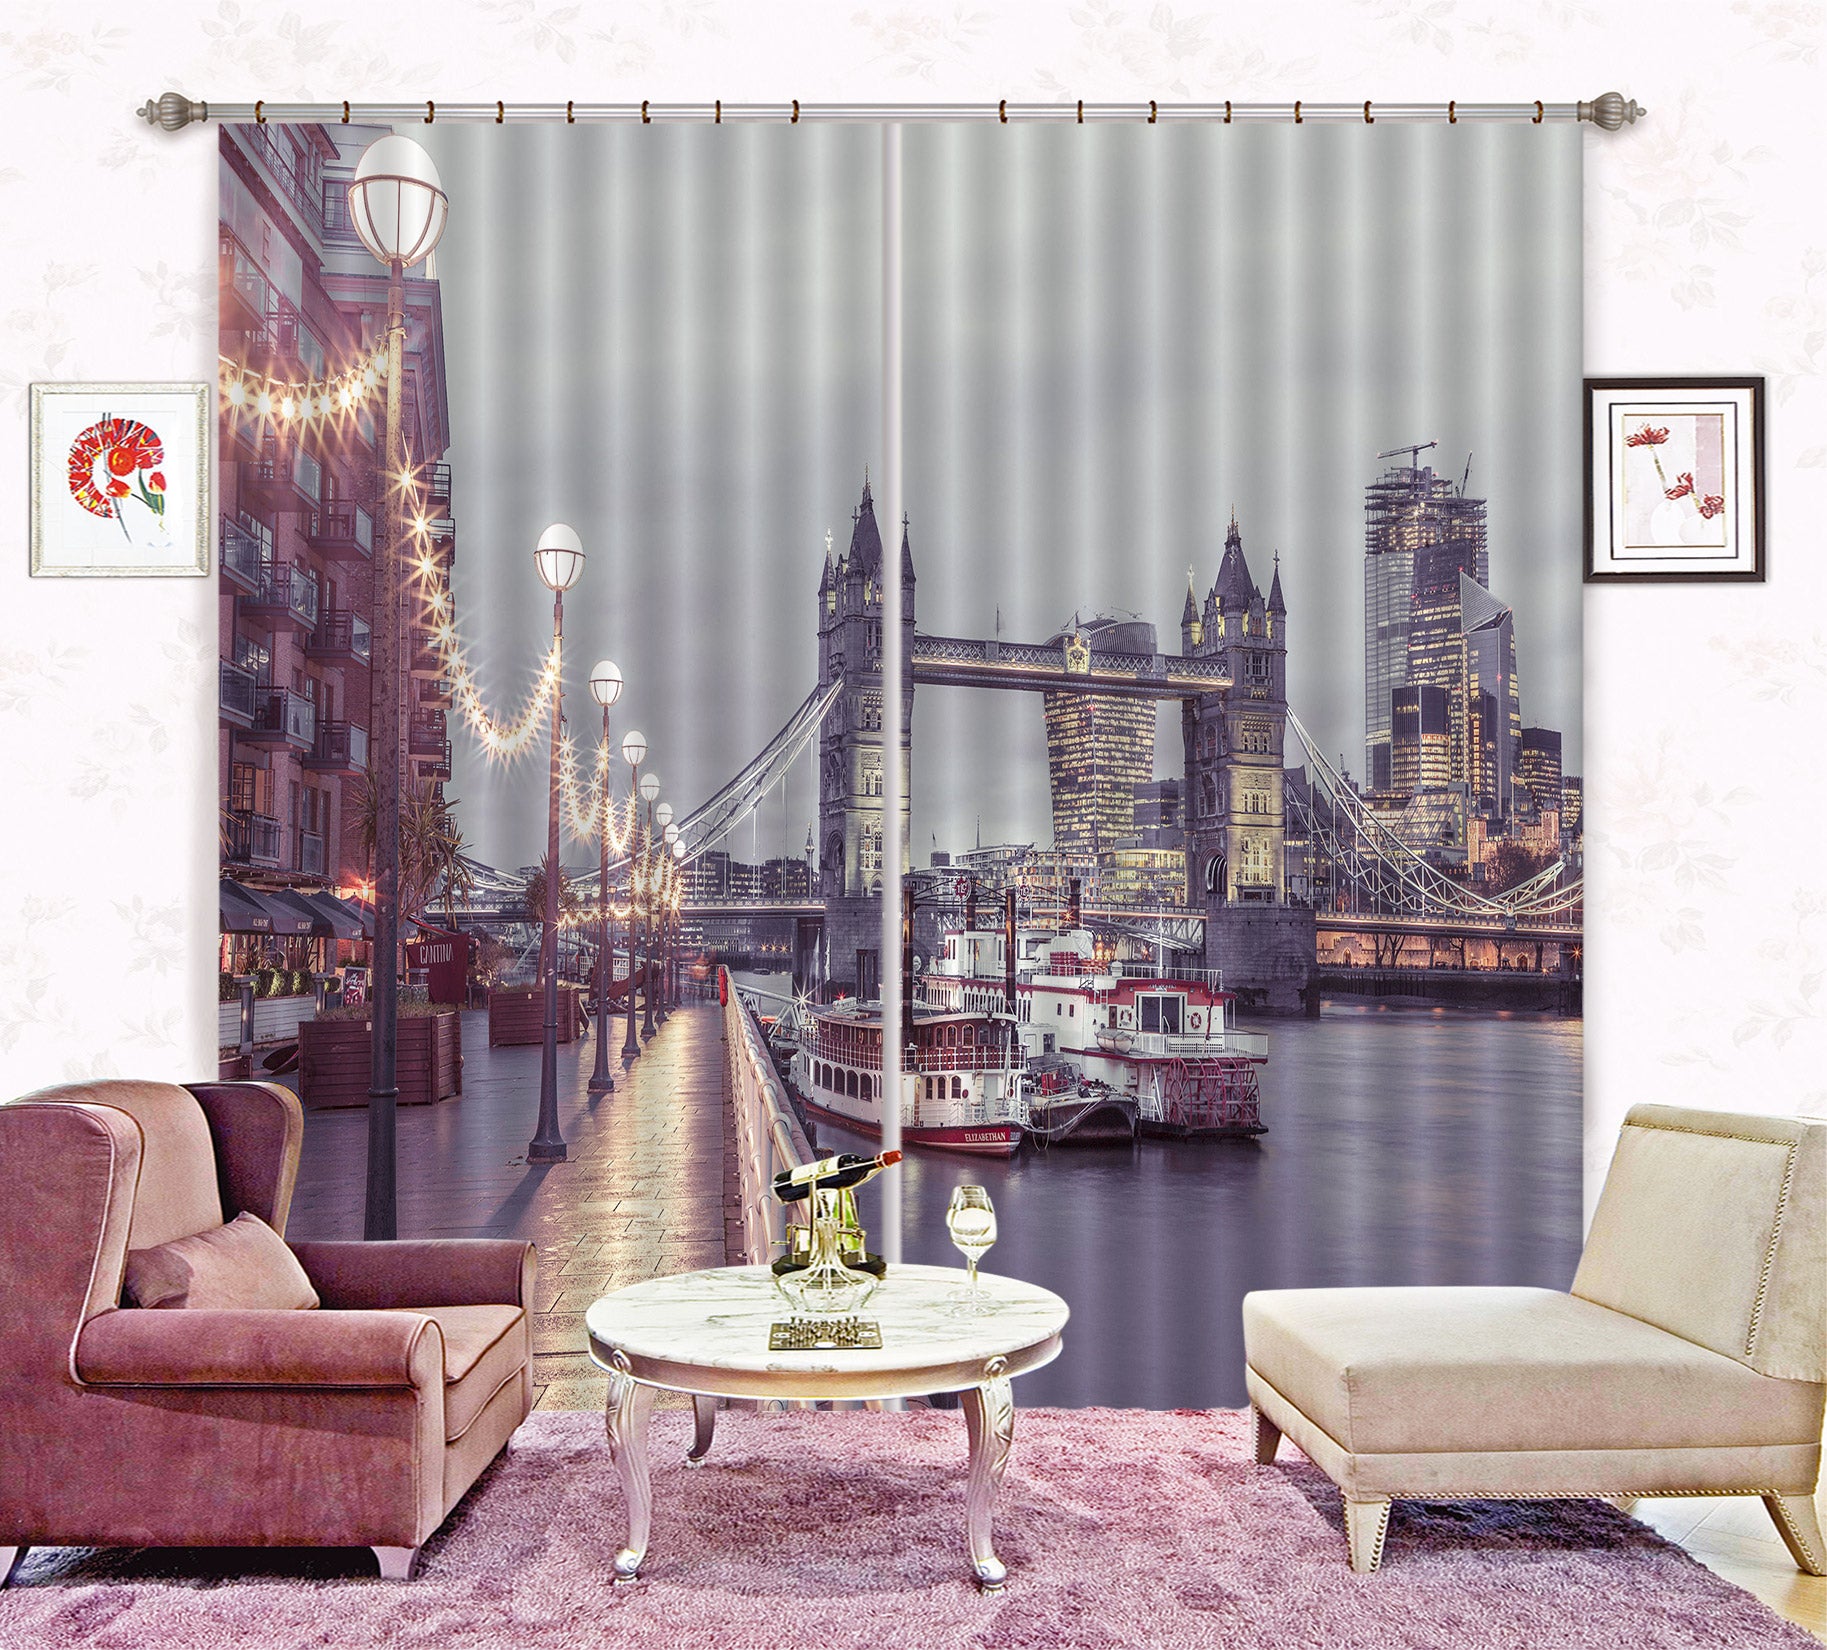 3D Street Light Boat 054 Assaf Frank Curtain Curtains Drapes